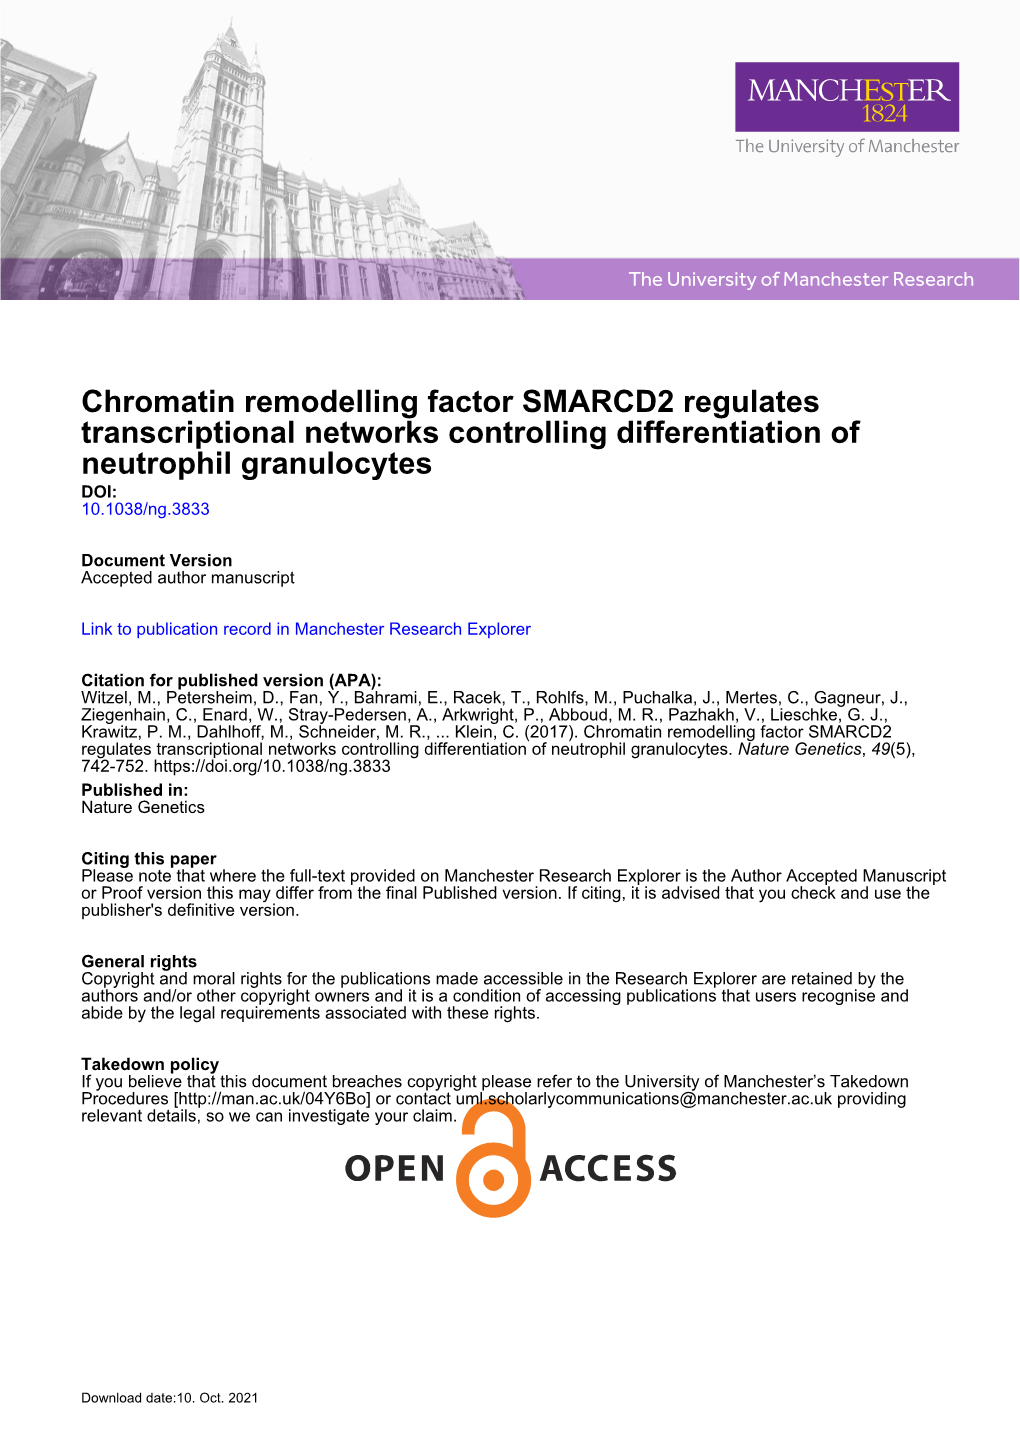 Chromatin Remodelling Factor SMARCD2 Regulates Transcriptional Networks Controlling Differentiation of Neutrophil Granulocytes DOI: 10.1038/Ng.3833